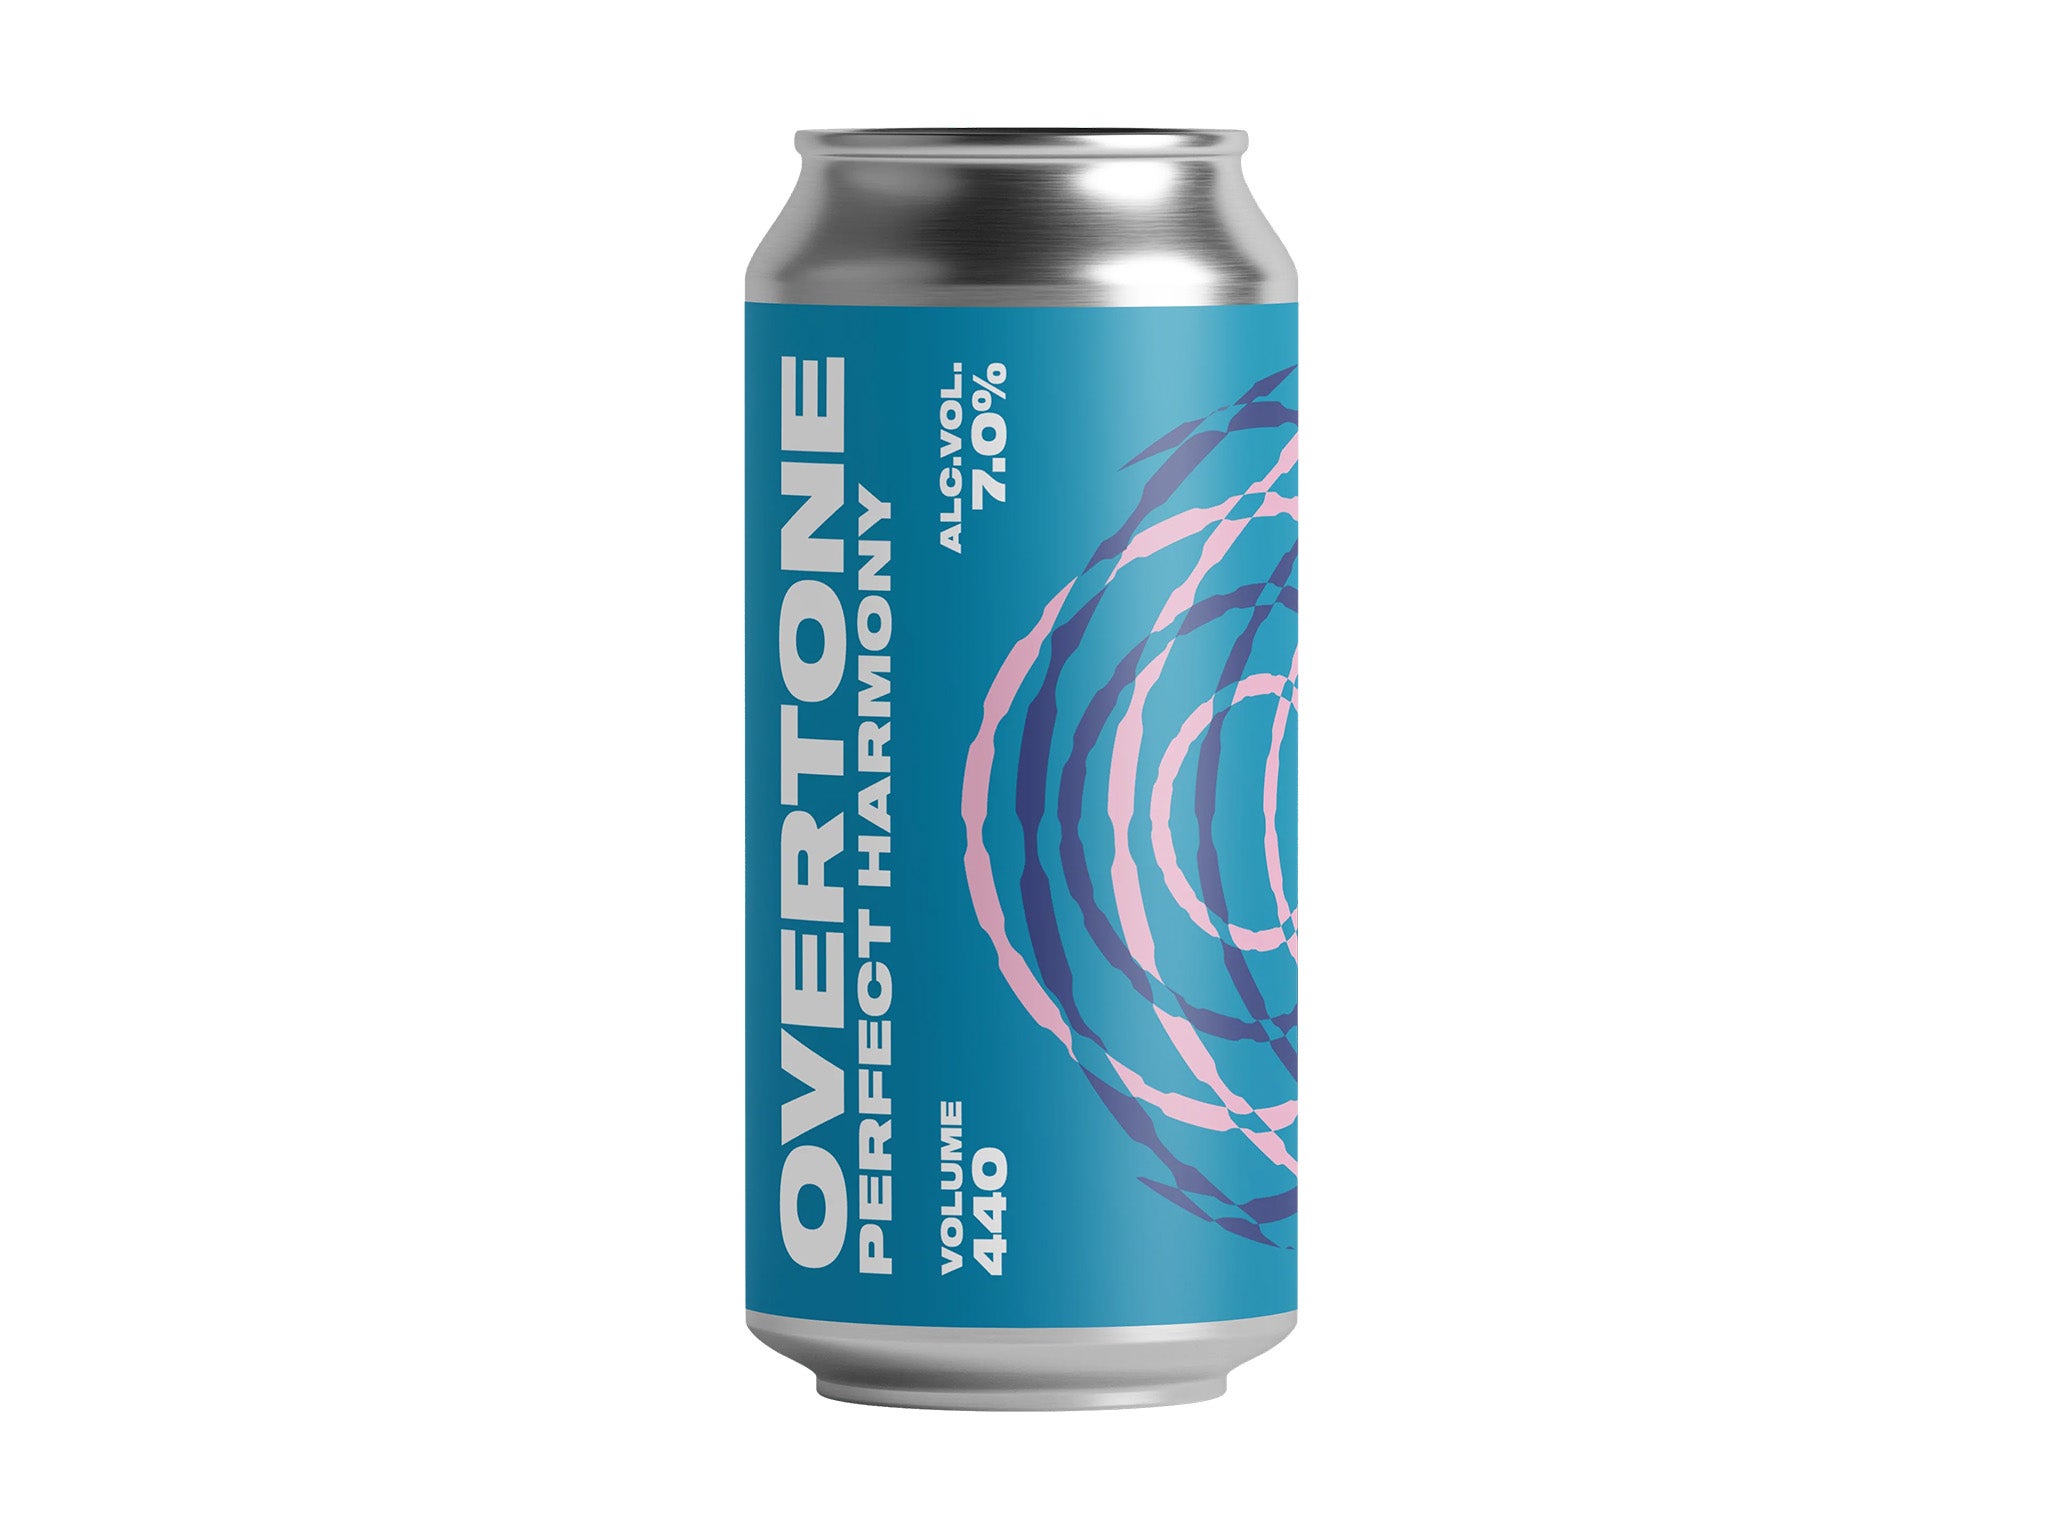 Overtone Brewing Co perfect harmony, 7%